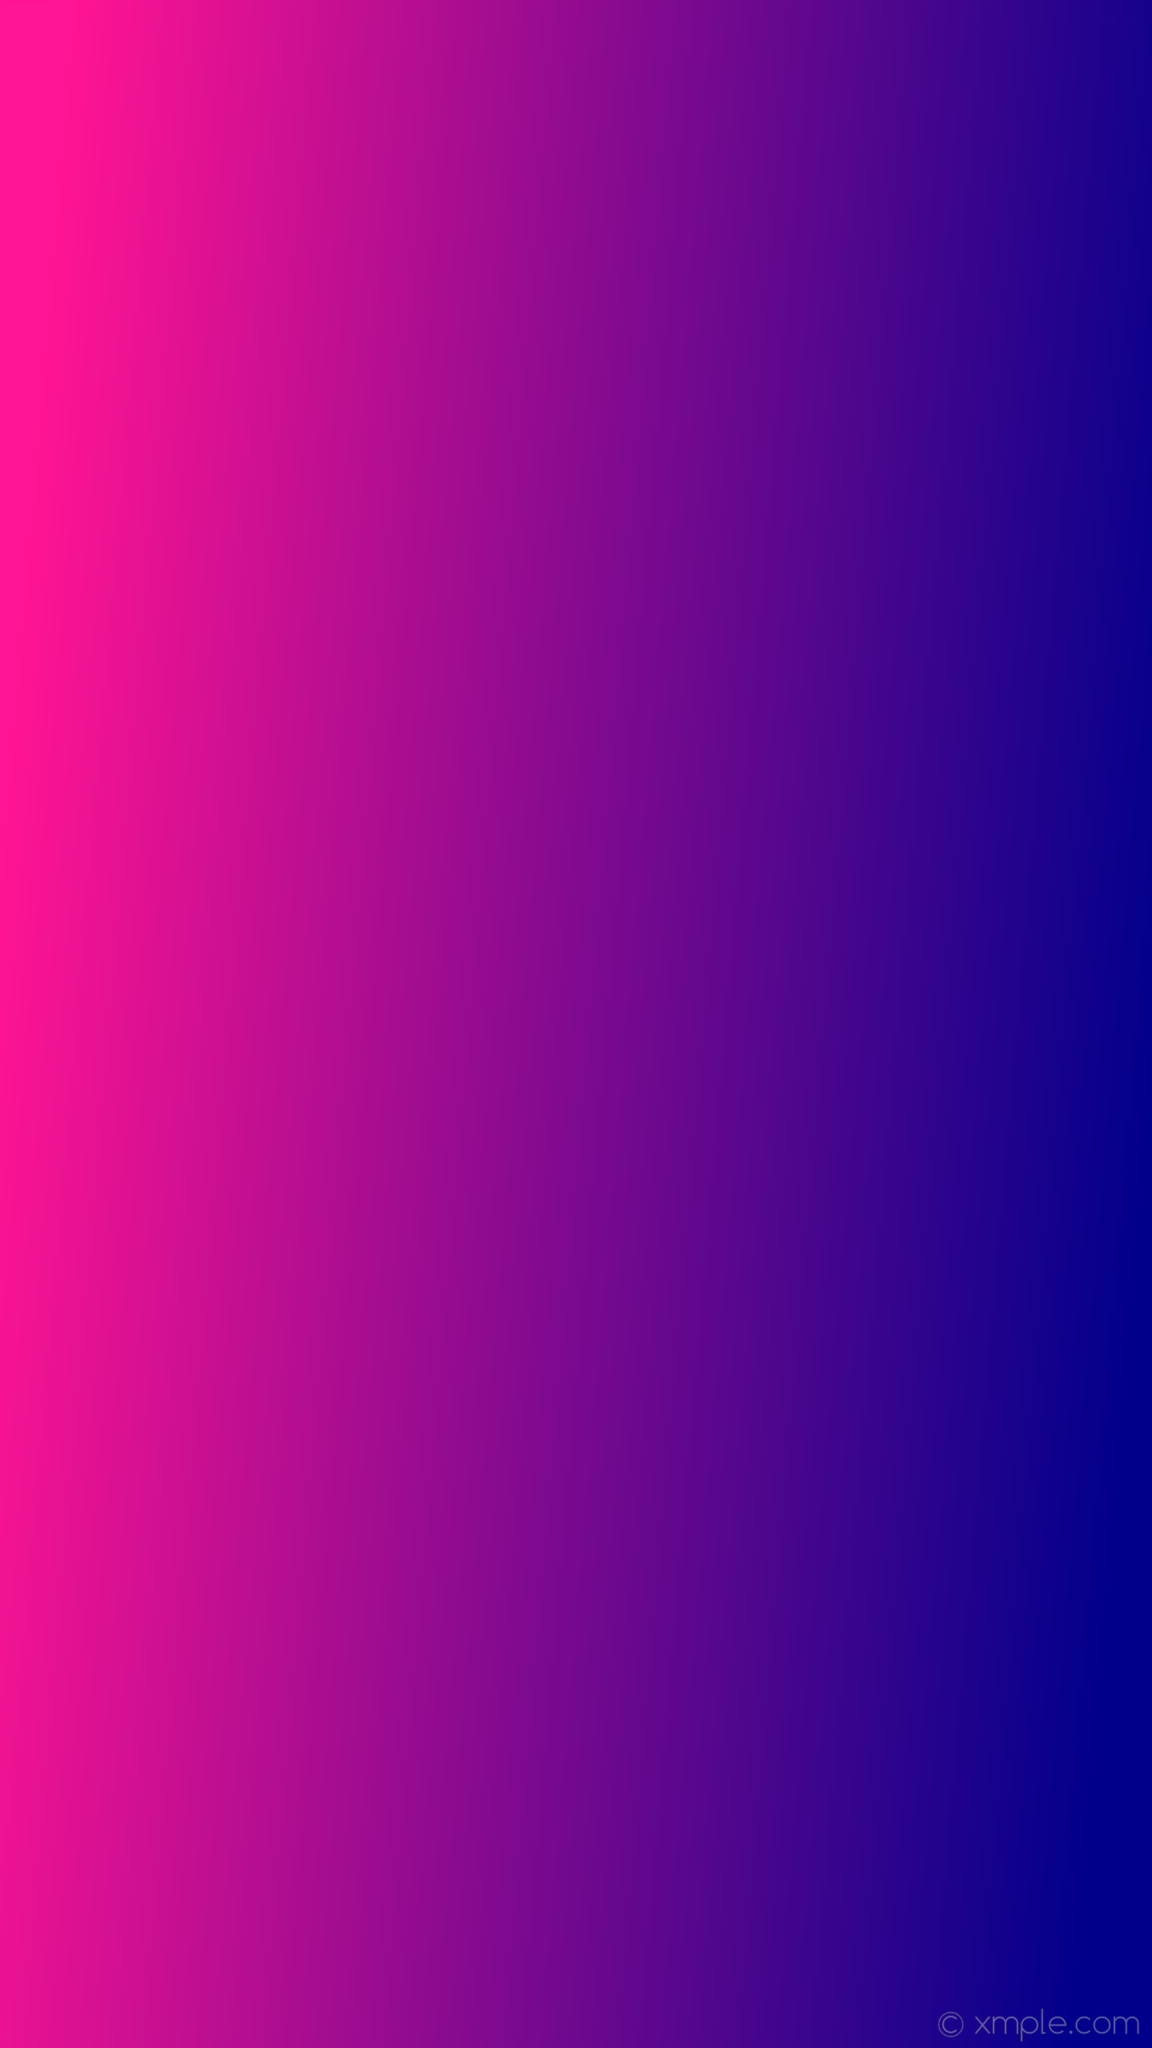 1152x2048 wallpaper blue linear gradient pink deep pink dark blue #ff1493 #00008b 165Â°